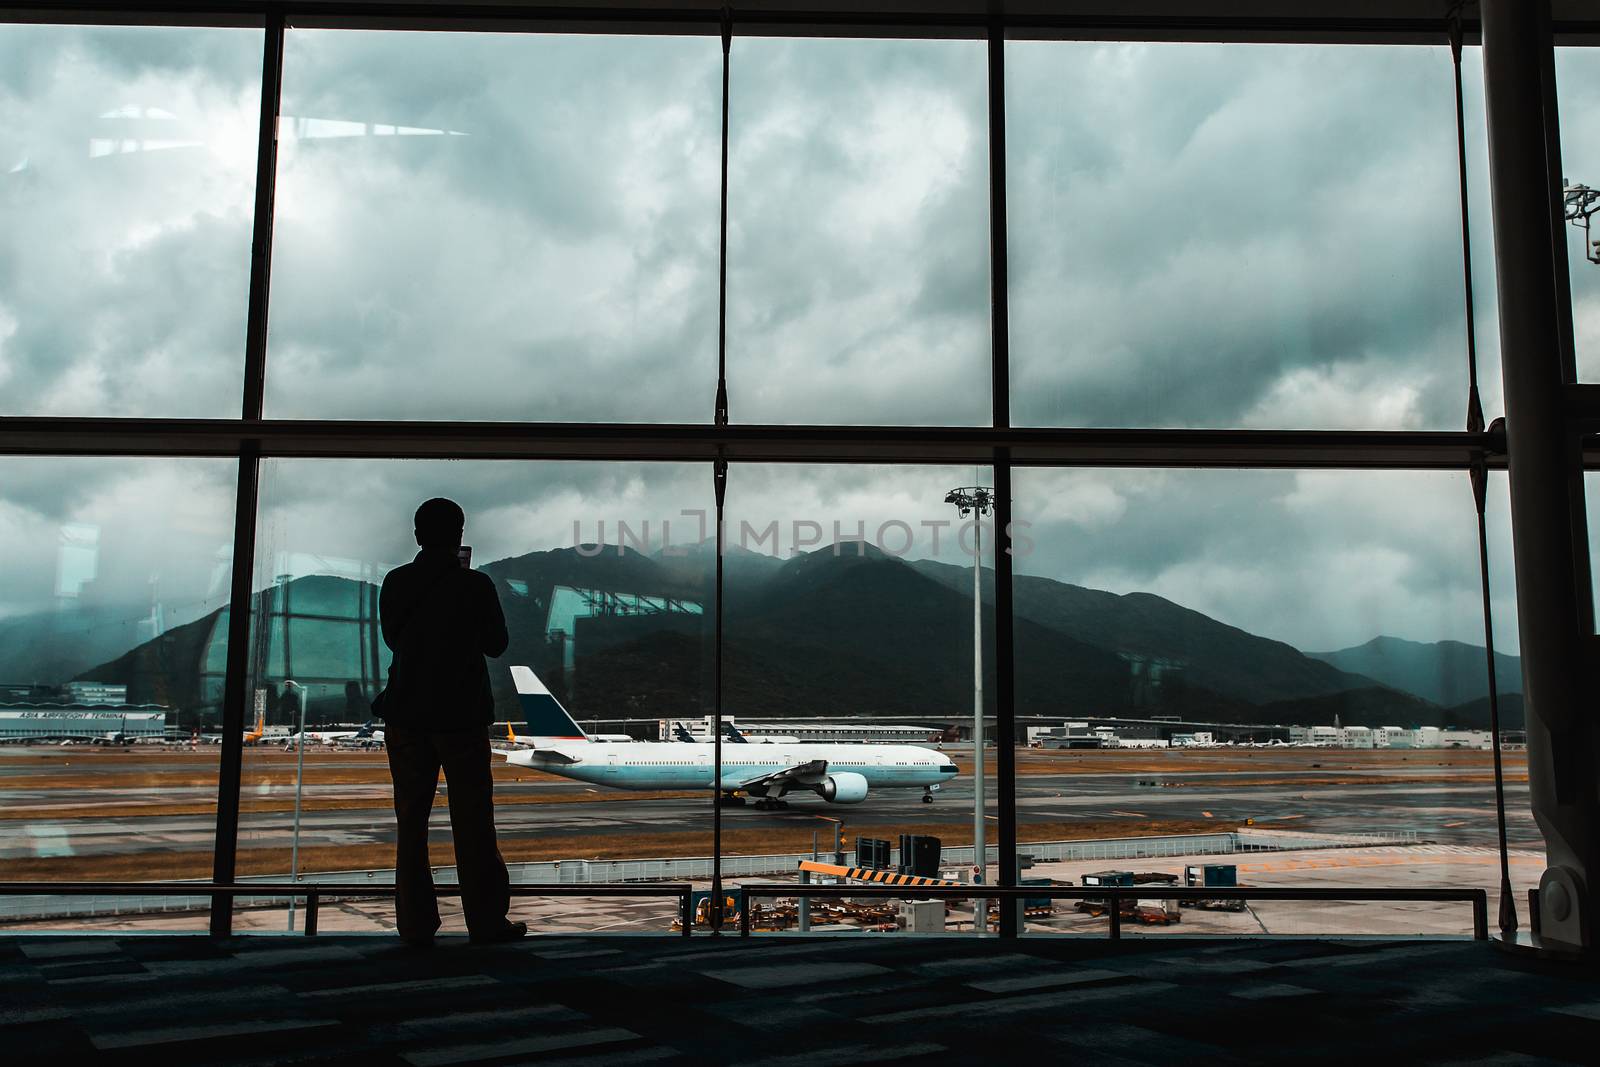 International Airport Terminal in blue tone